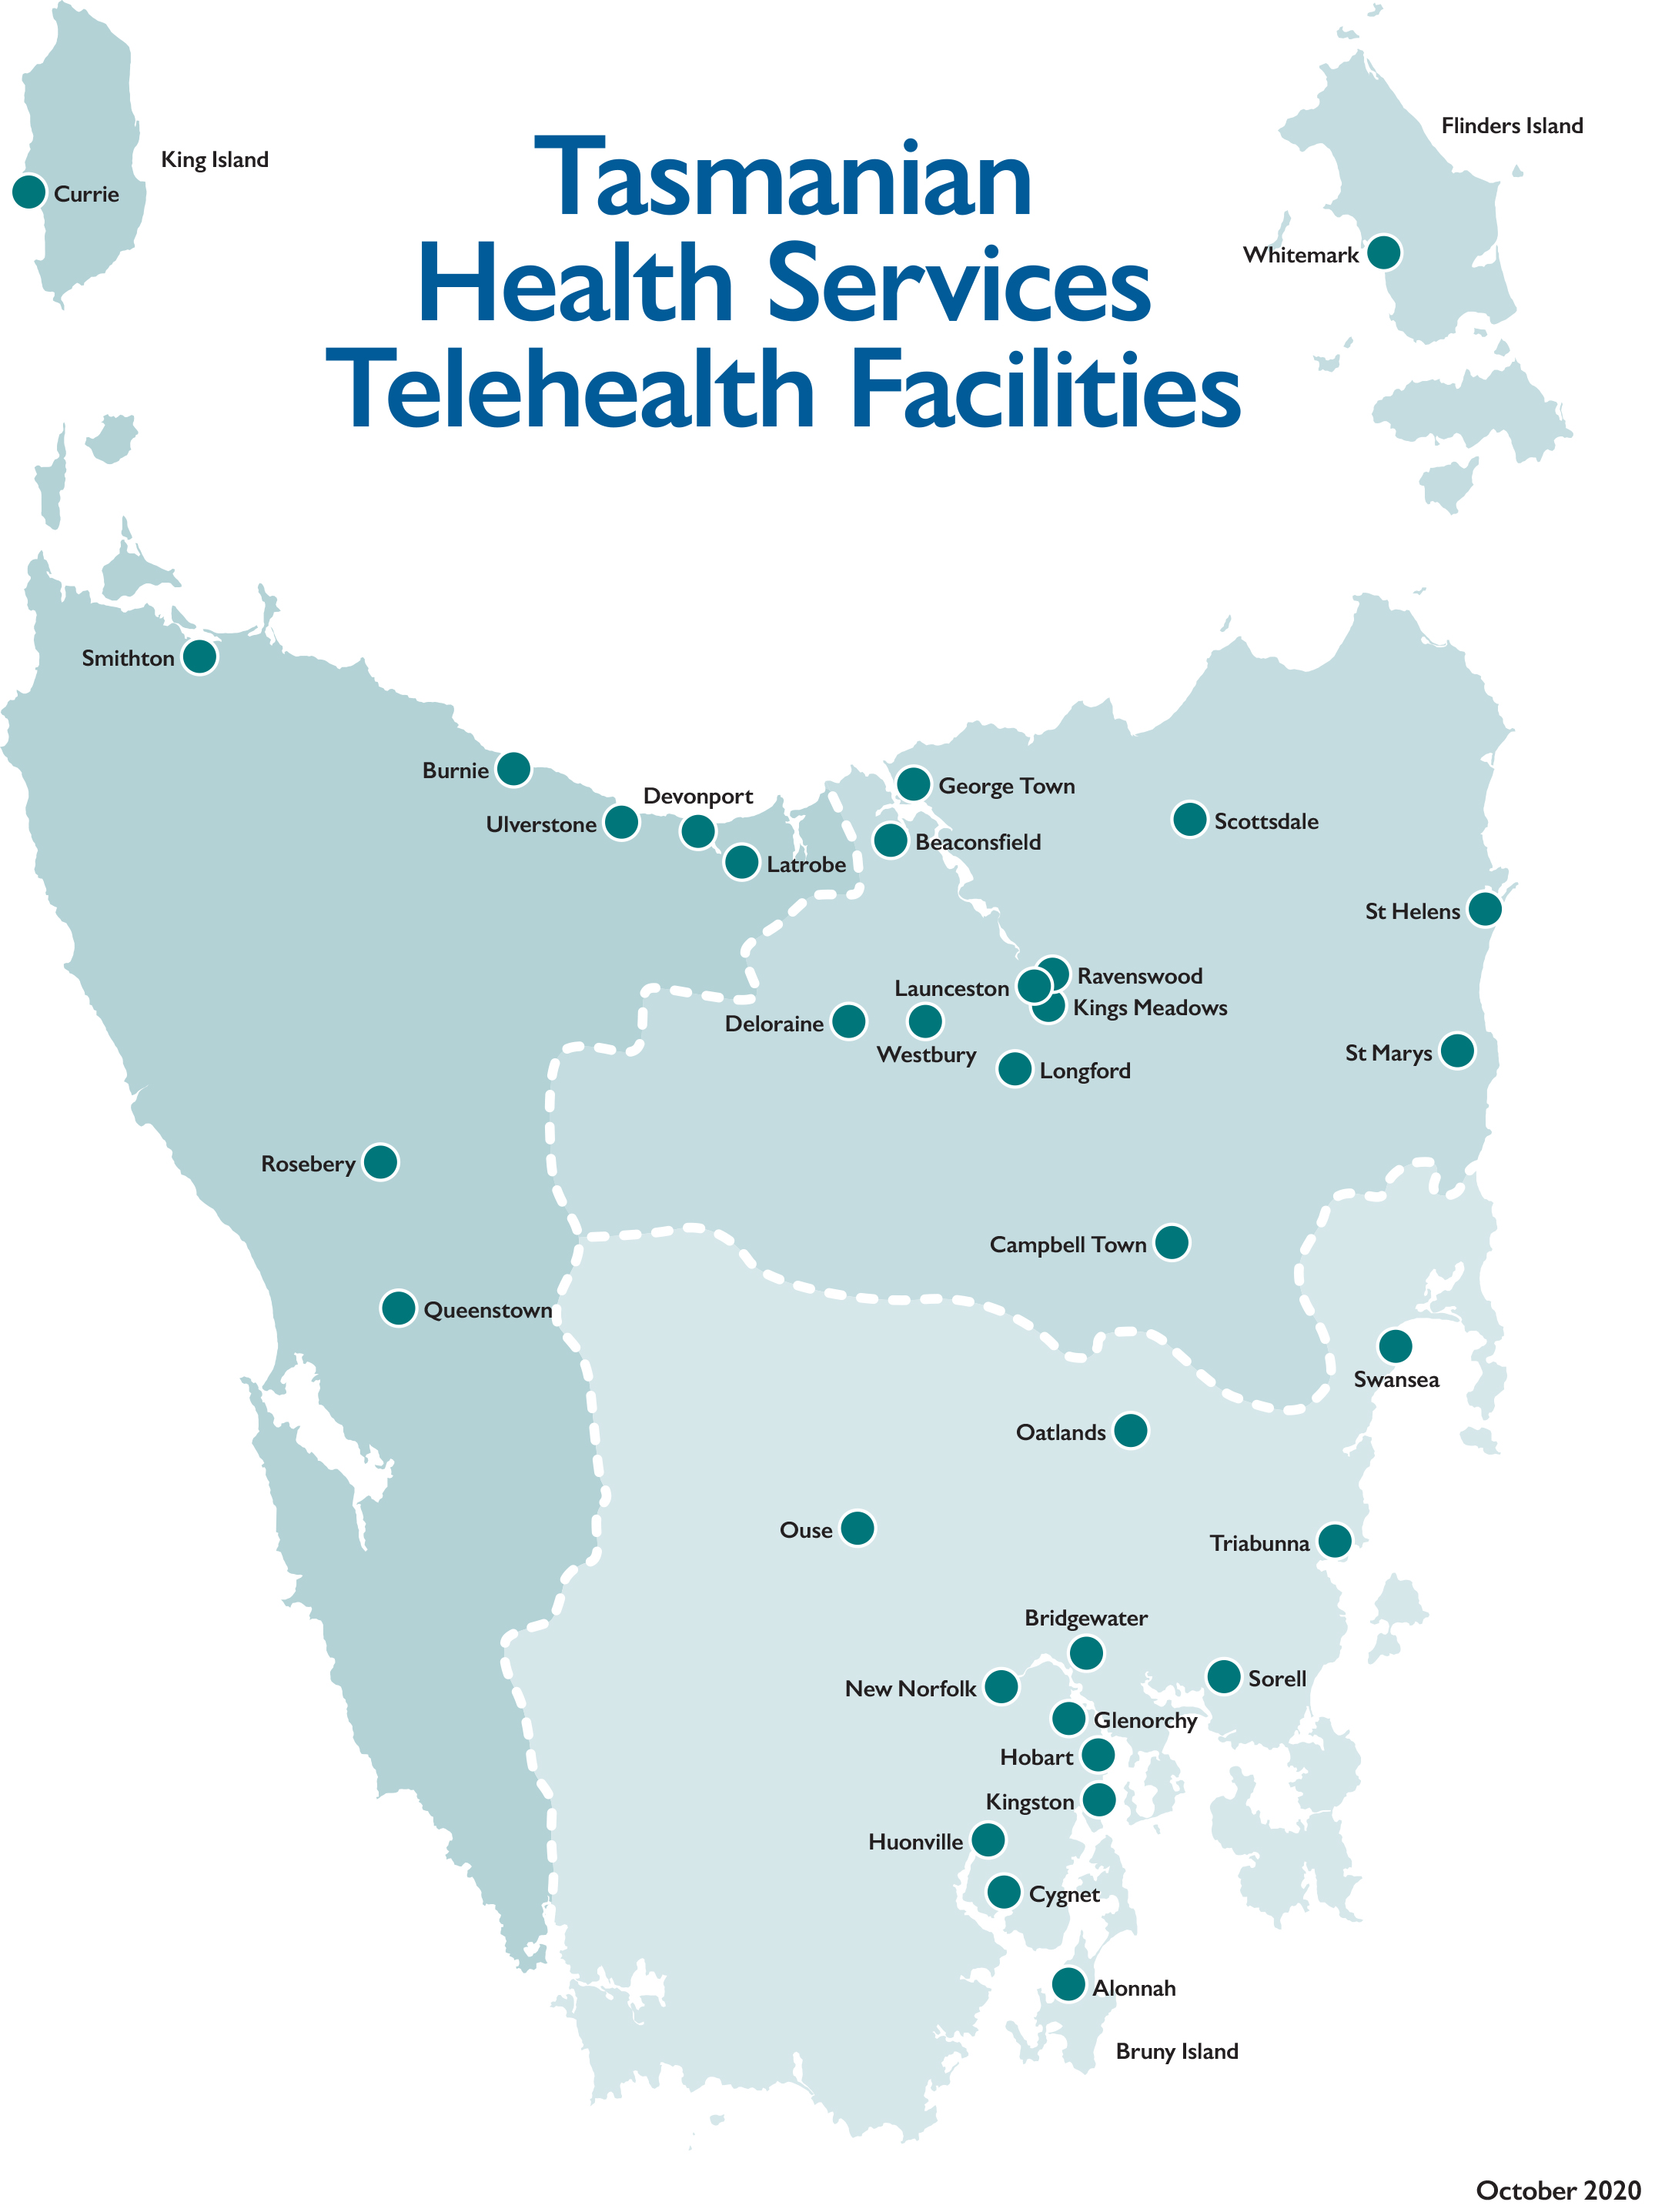 THS Telehealth Facilities